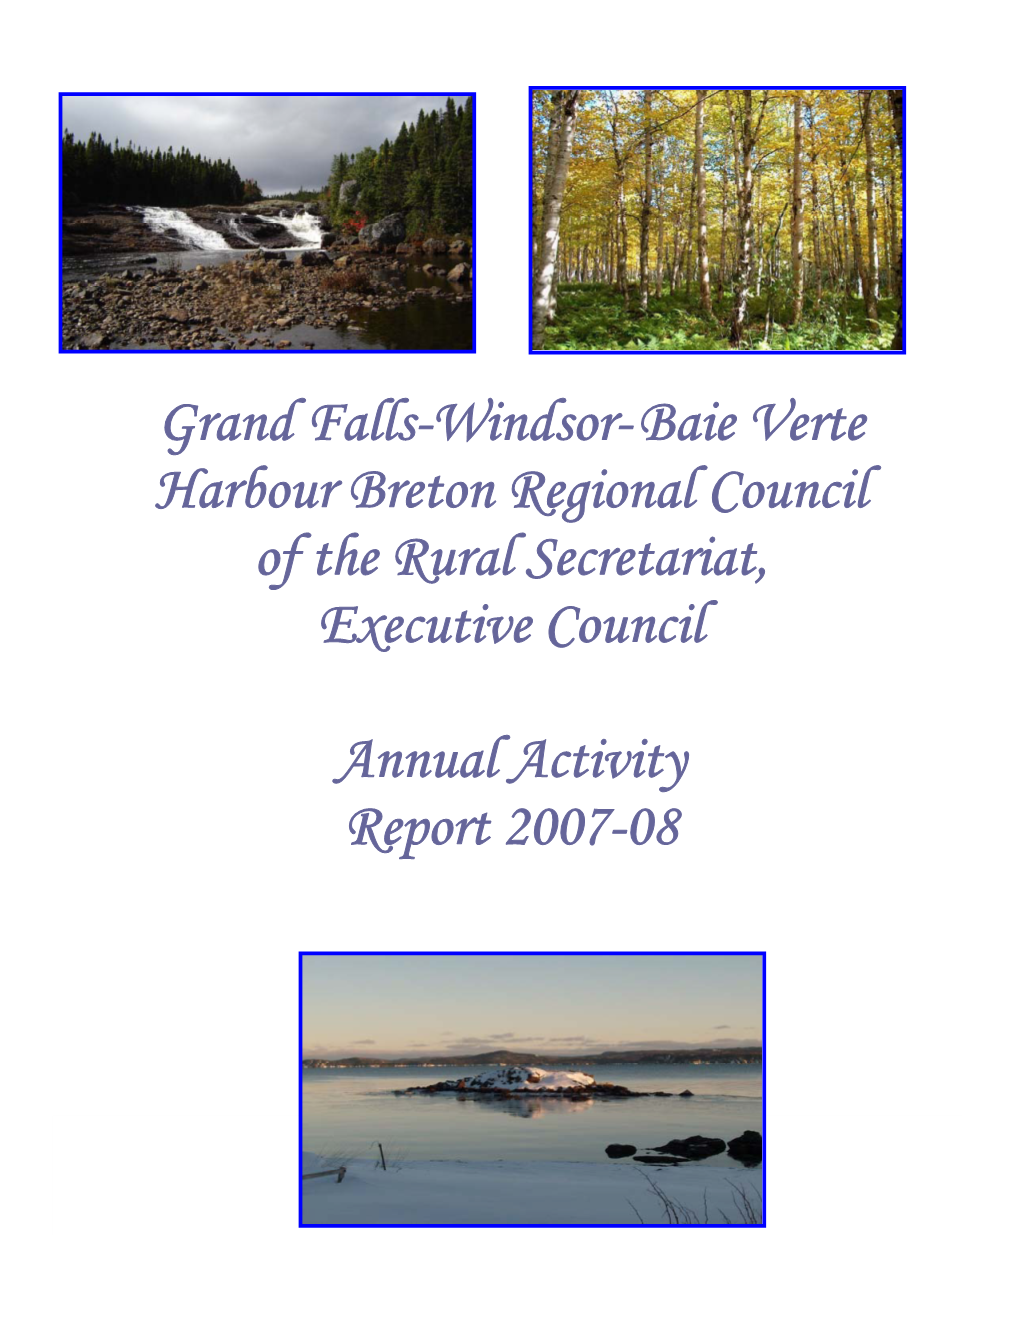 Grand Falls-Windsor- Baie Verte Harbour Breton Regional Council of the Rural Secretariat, Executive Council